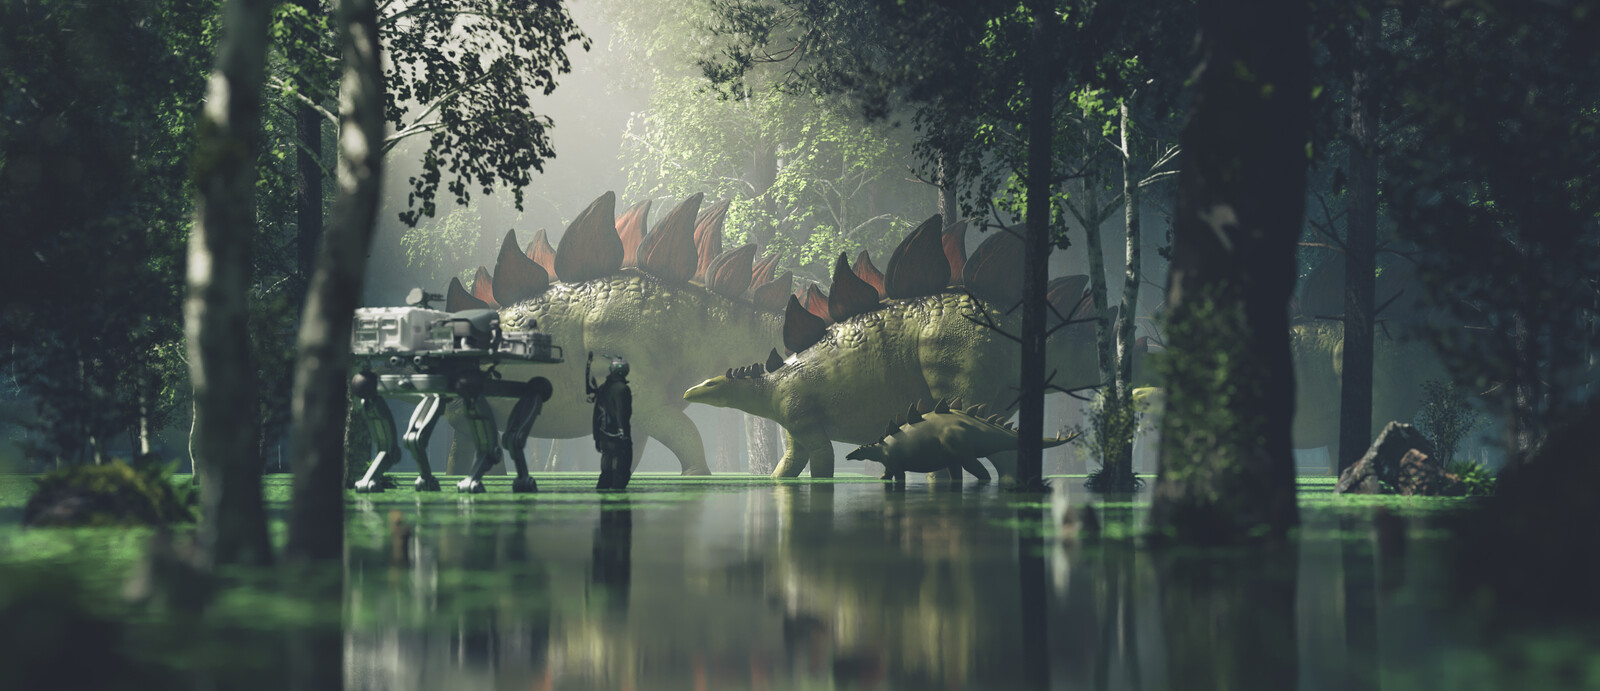 Stegosaurus swamp